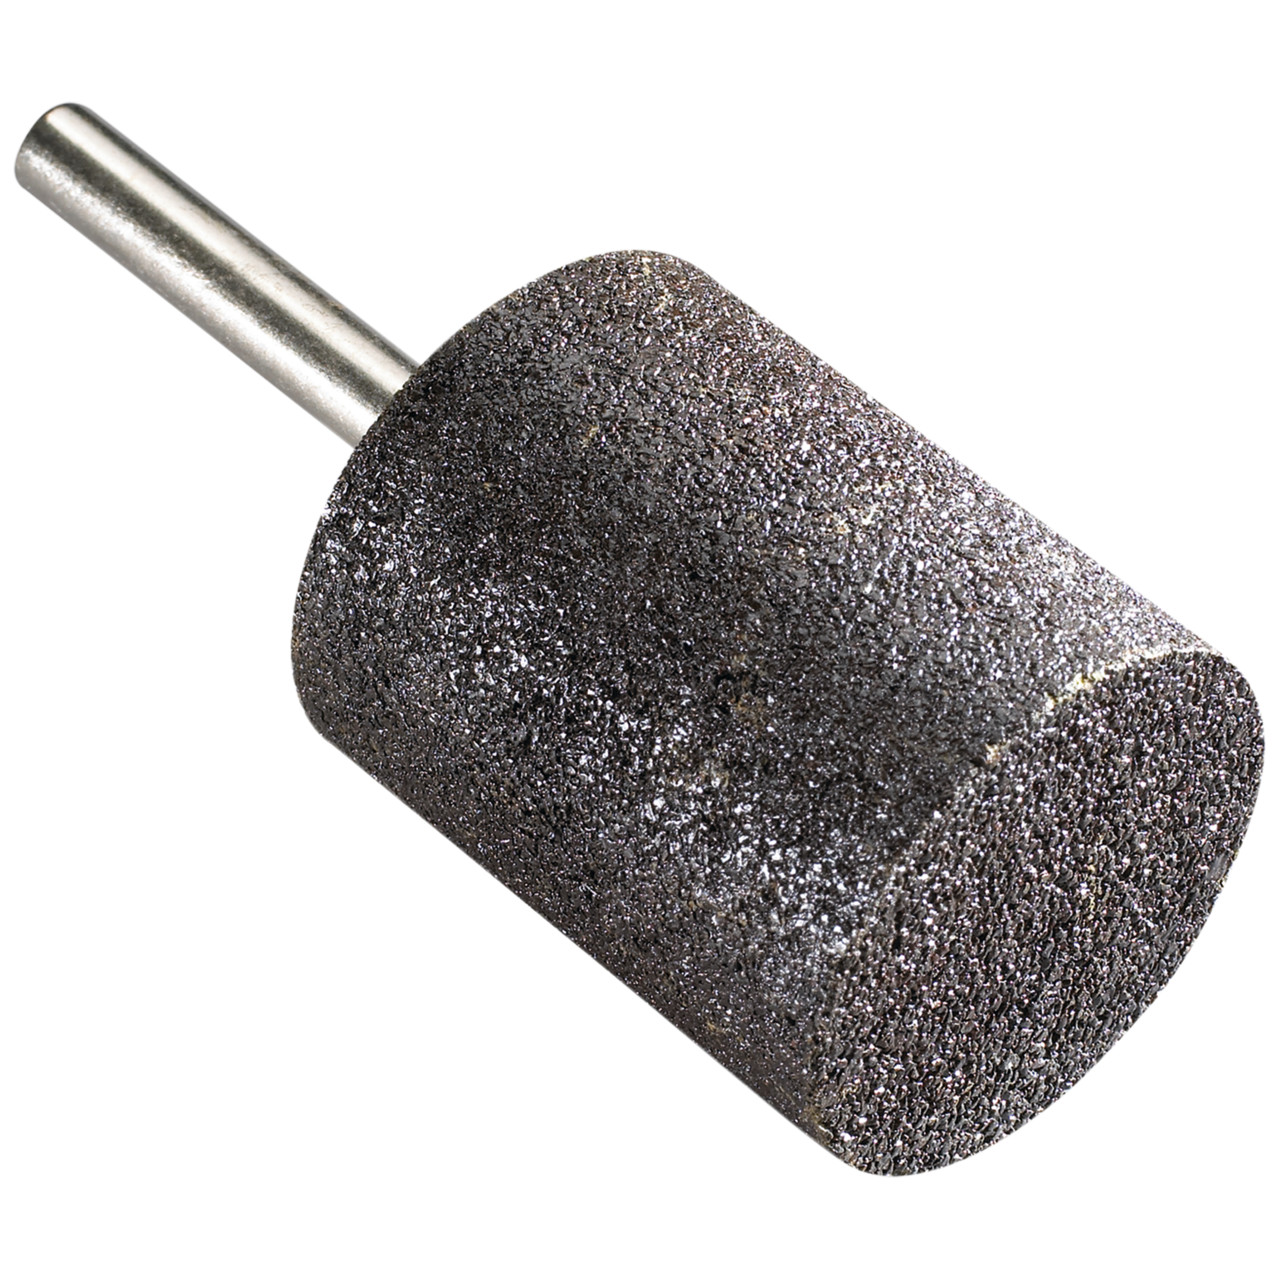 Tyrolit Punti montati in resina DxT-SxL 15x25-6x40 Per ghisa, forma: 52ZY - cilindro (punto montato), Art. 108262